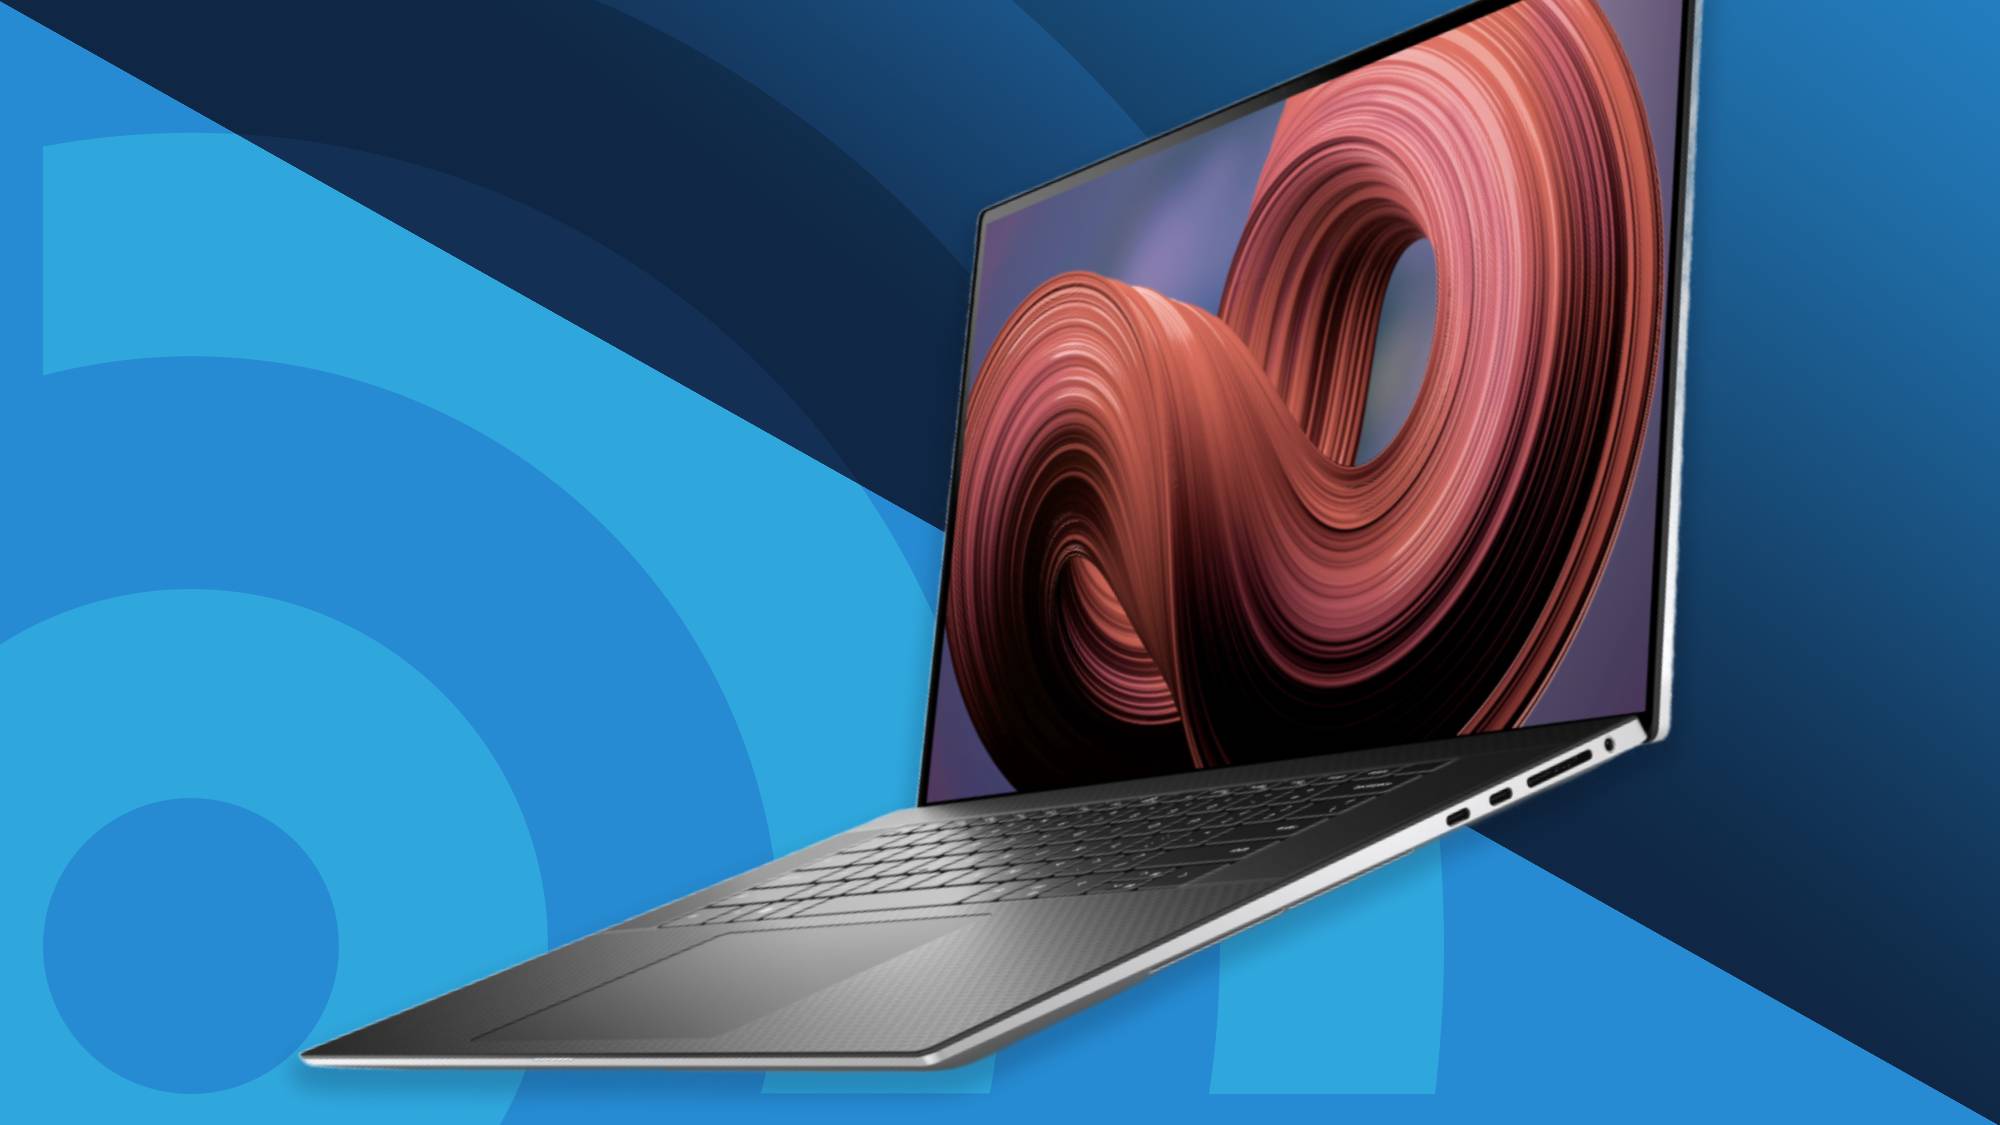 Intel 10th Generation Core i5 Windows Laptops - Best Buy